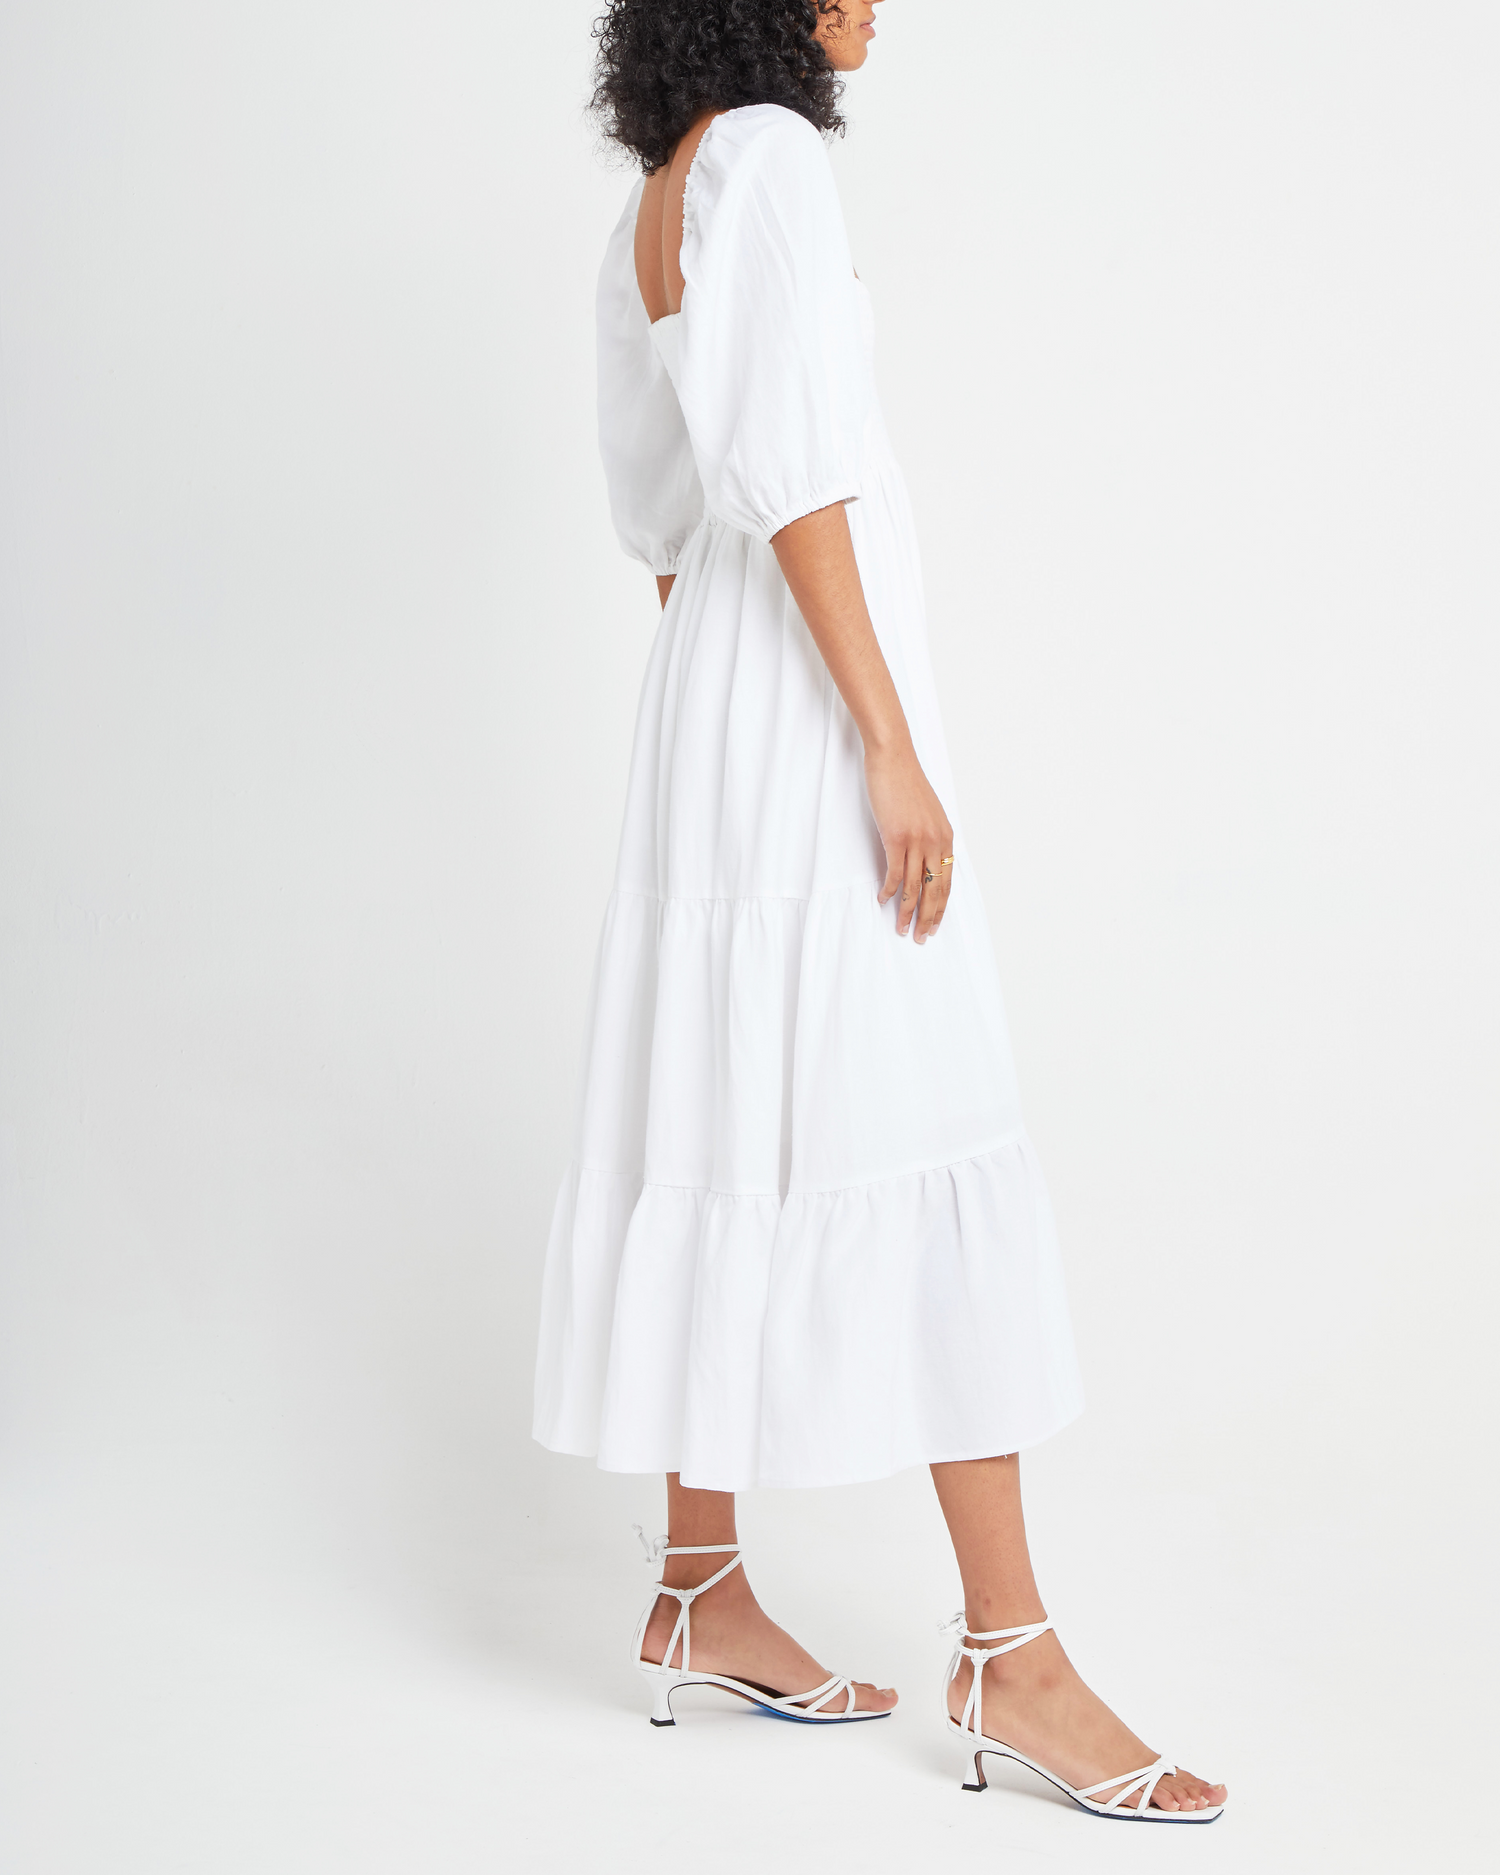 Third image of Hera Dress, a white midi dress, smocked bodice, puff sleeves, short sleeves